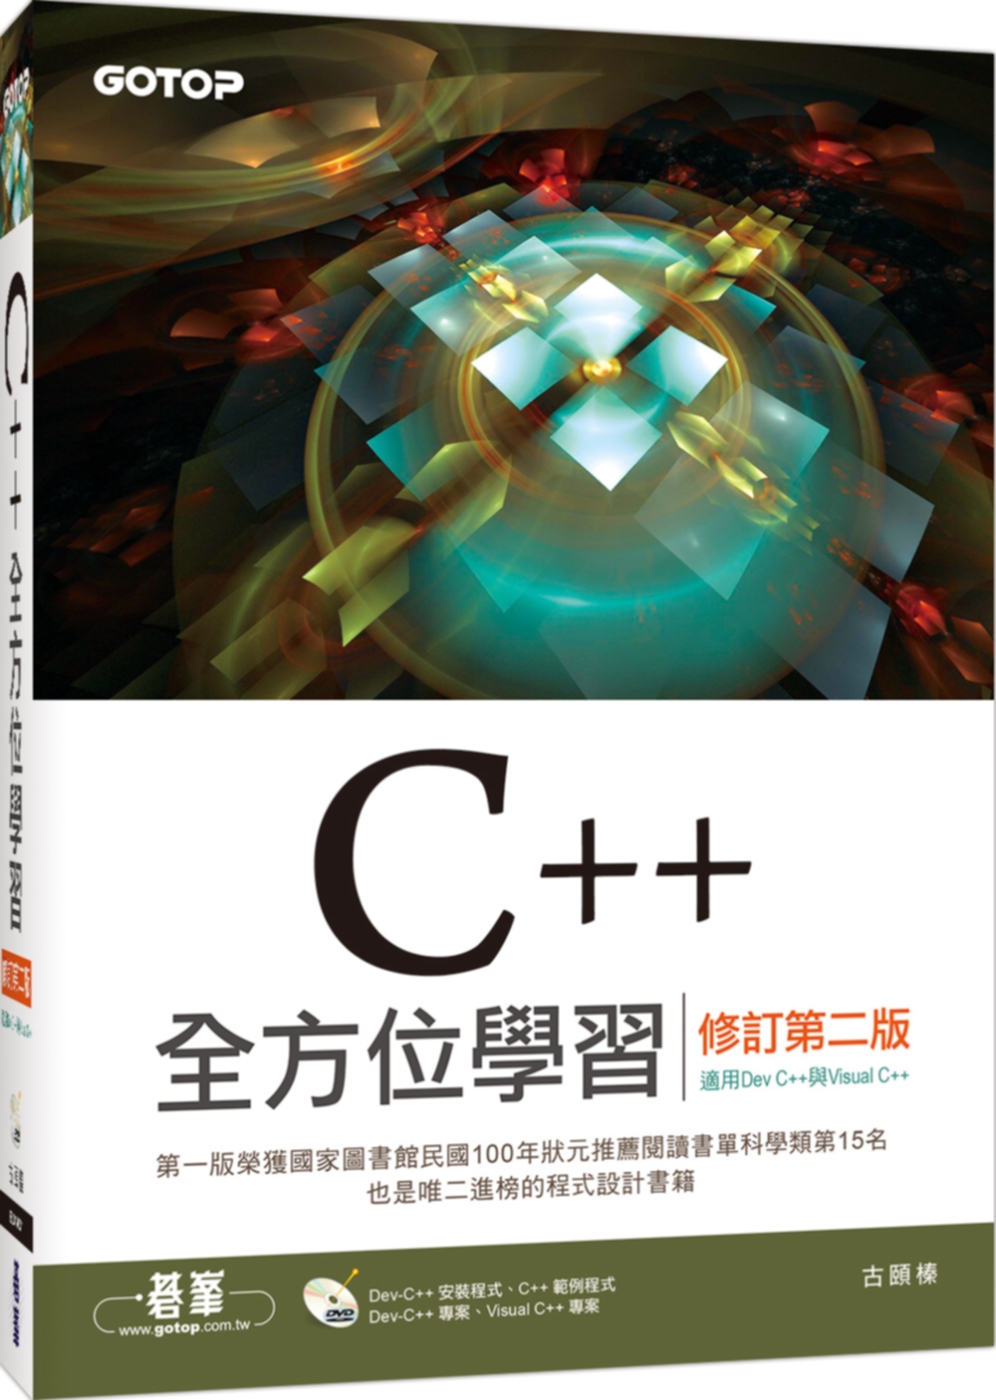 ►GO►最新優惠► 【書籍】C++全方位學習(修訂第二版)(適用Dev C++與Visual C++)